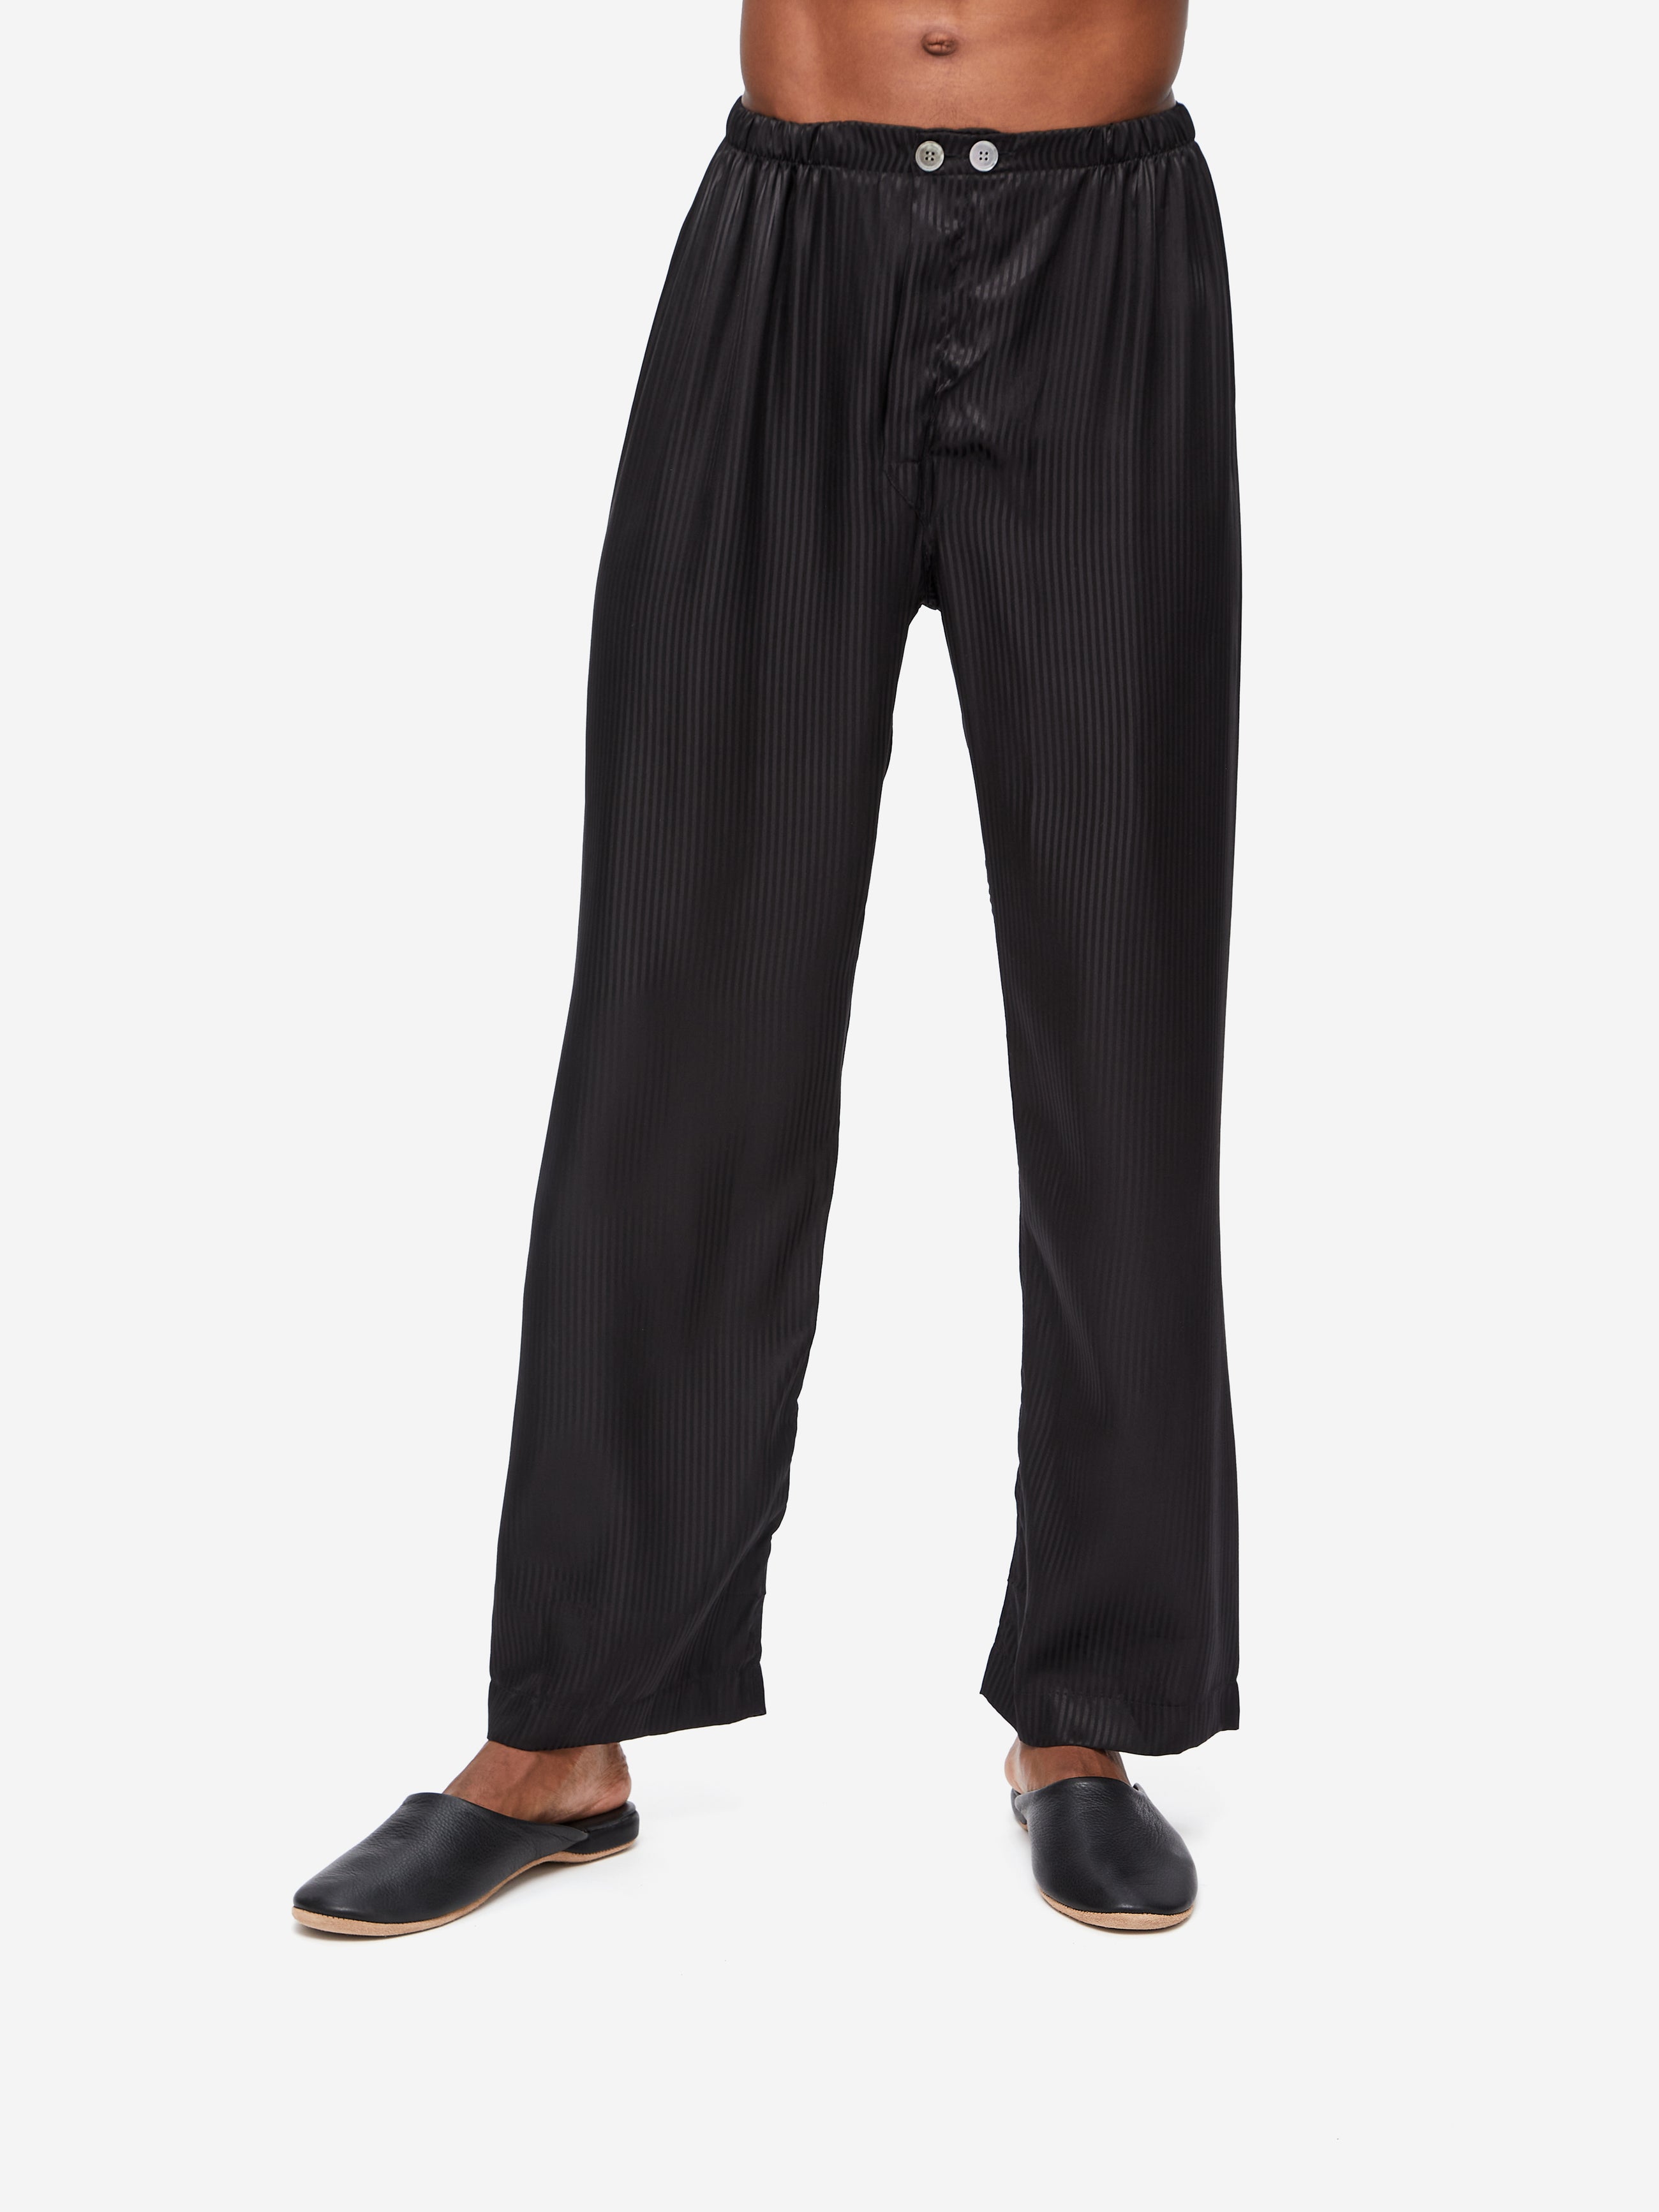 Men's Classic Fit Pyjamas Woburn 8 Silk Satin Black